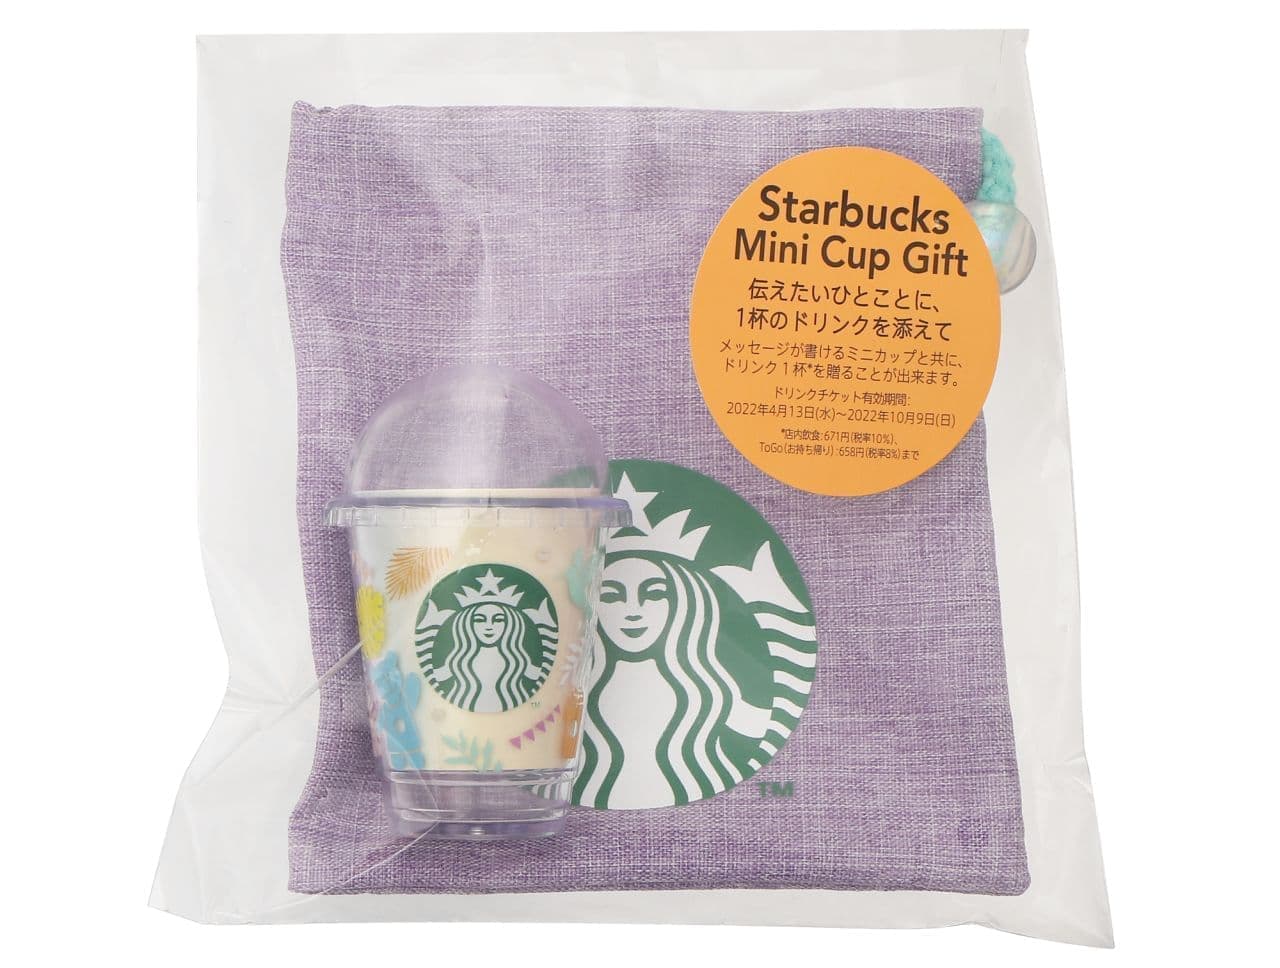 Starbucks "Starbucks Mini Cup Gift Colorful Summer